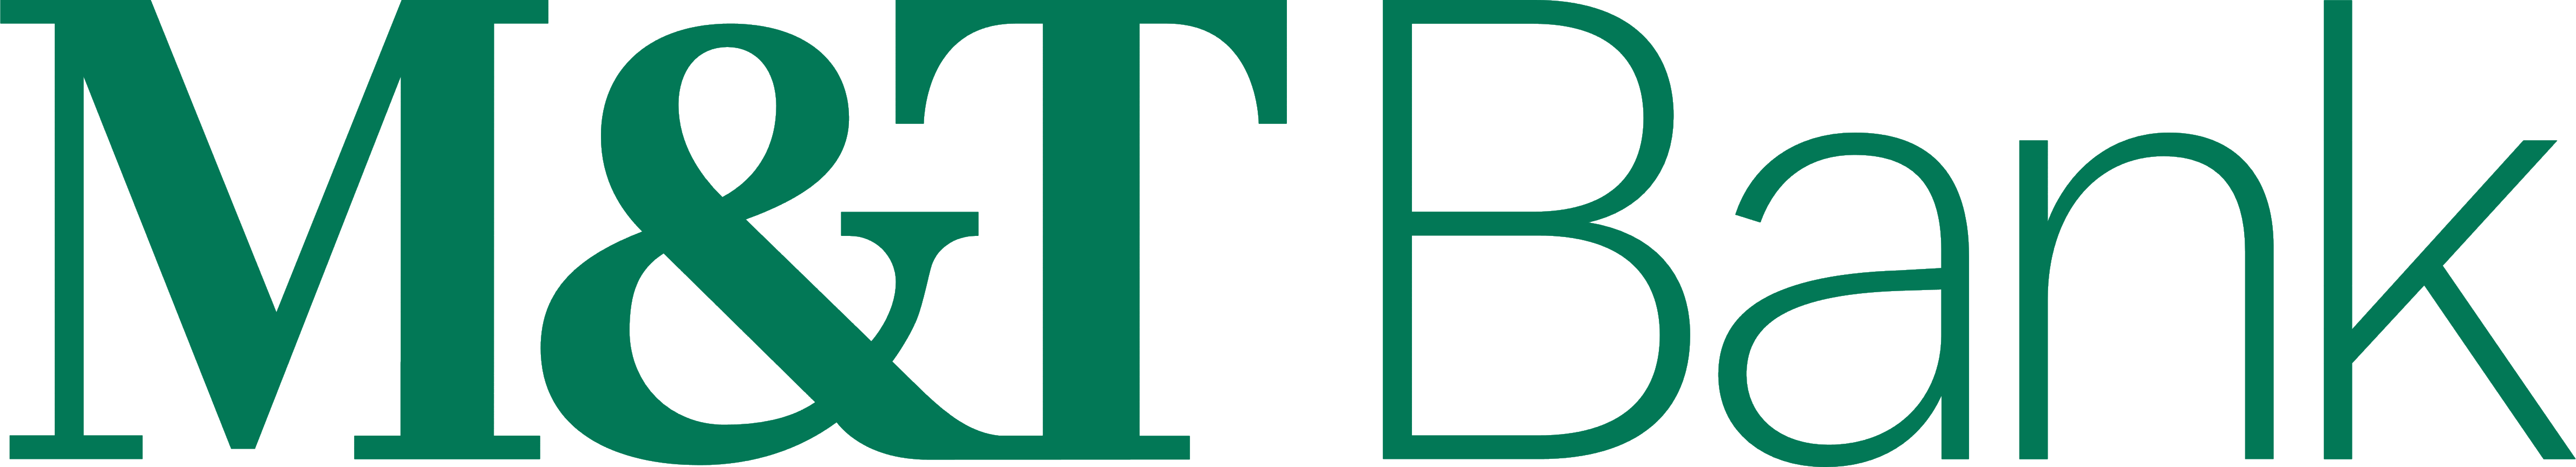 Mt logo